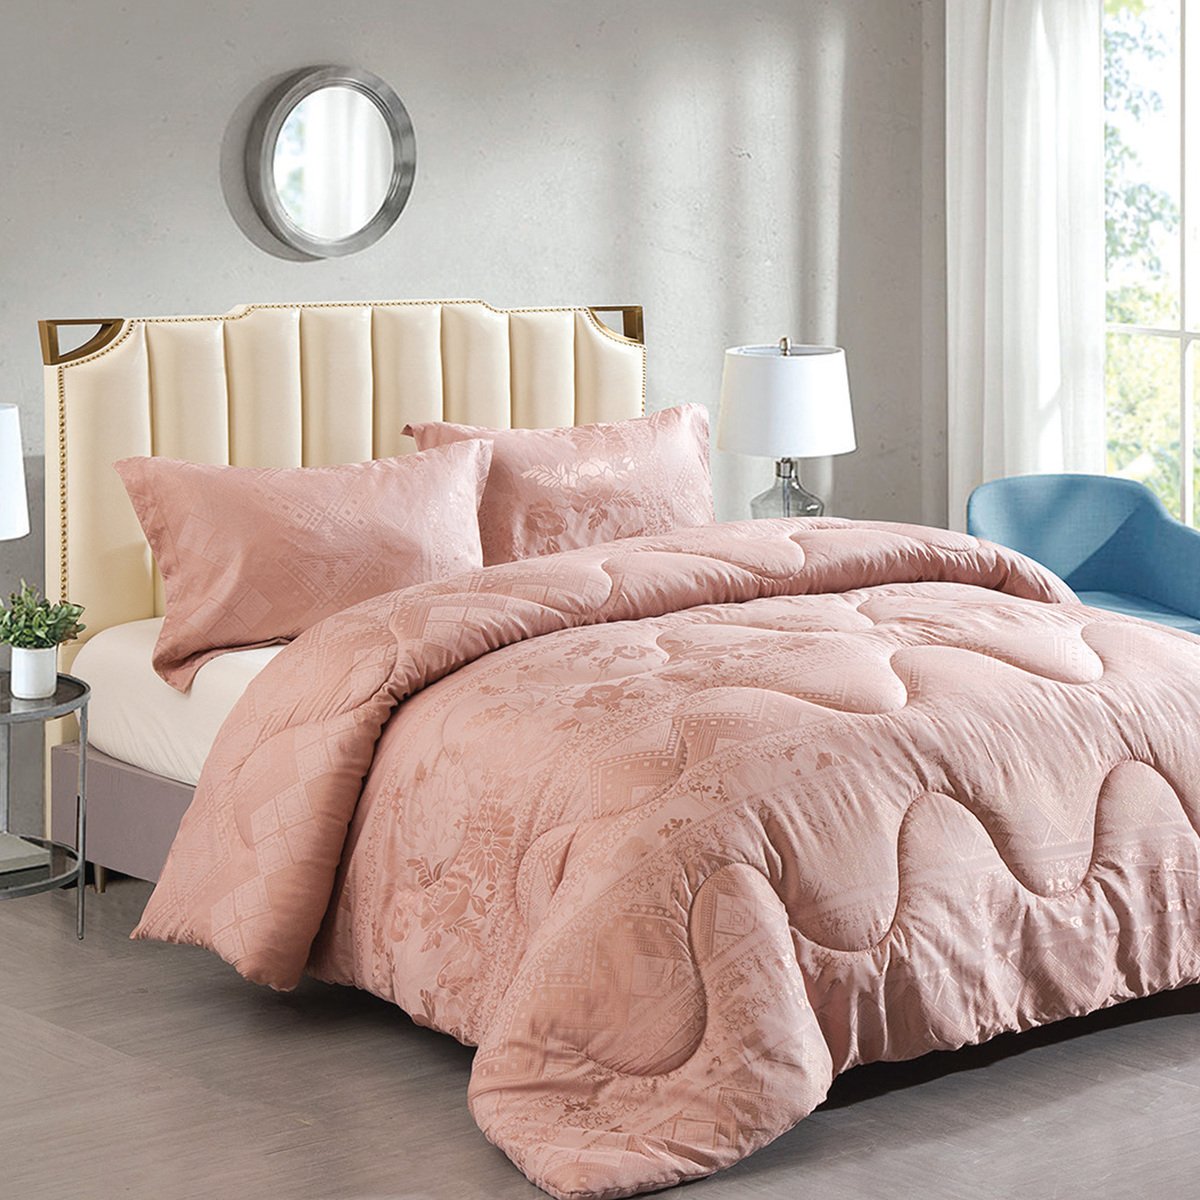 Masterpiece Comforter 250x230cm 3pc Set  Assorted Colors & Designs